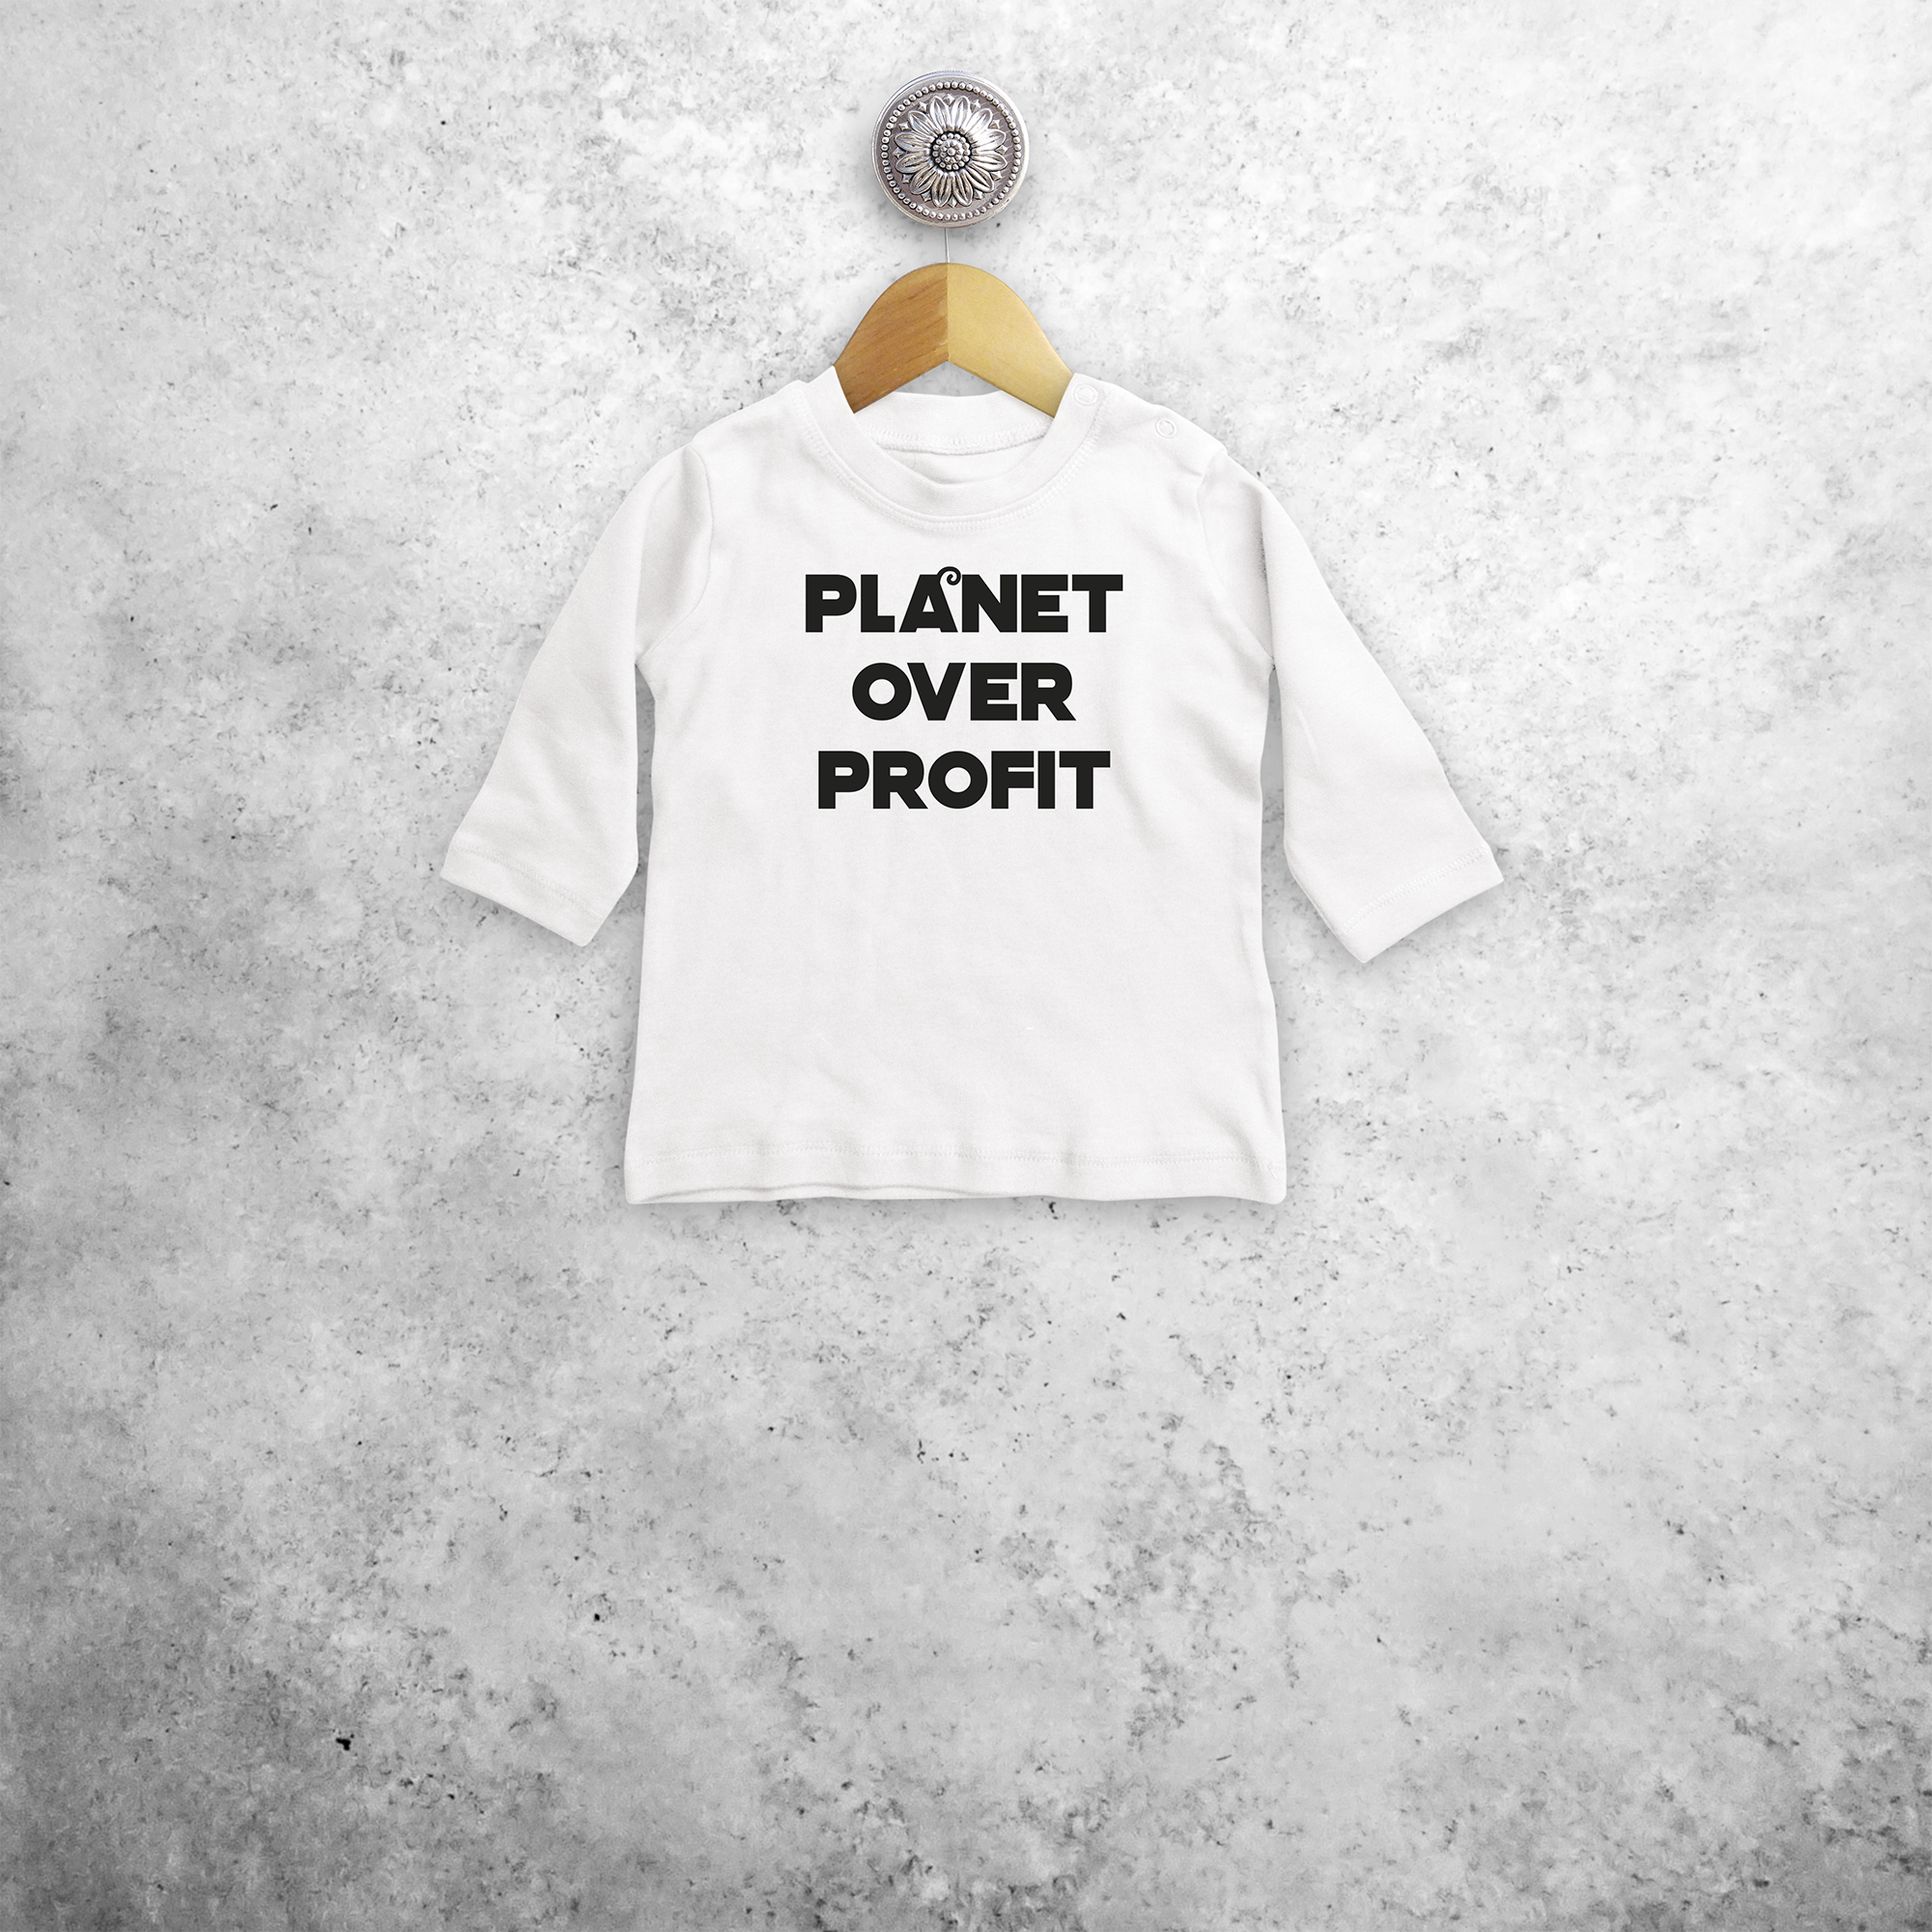 'Planet over profit' baby longsleeve shirt